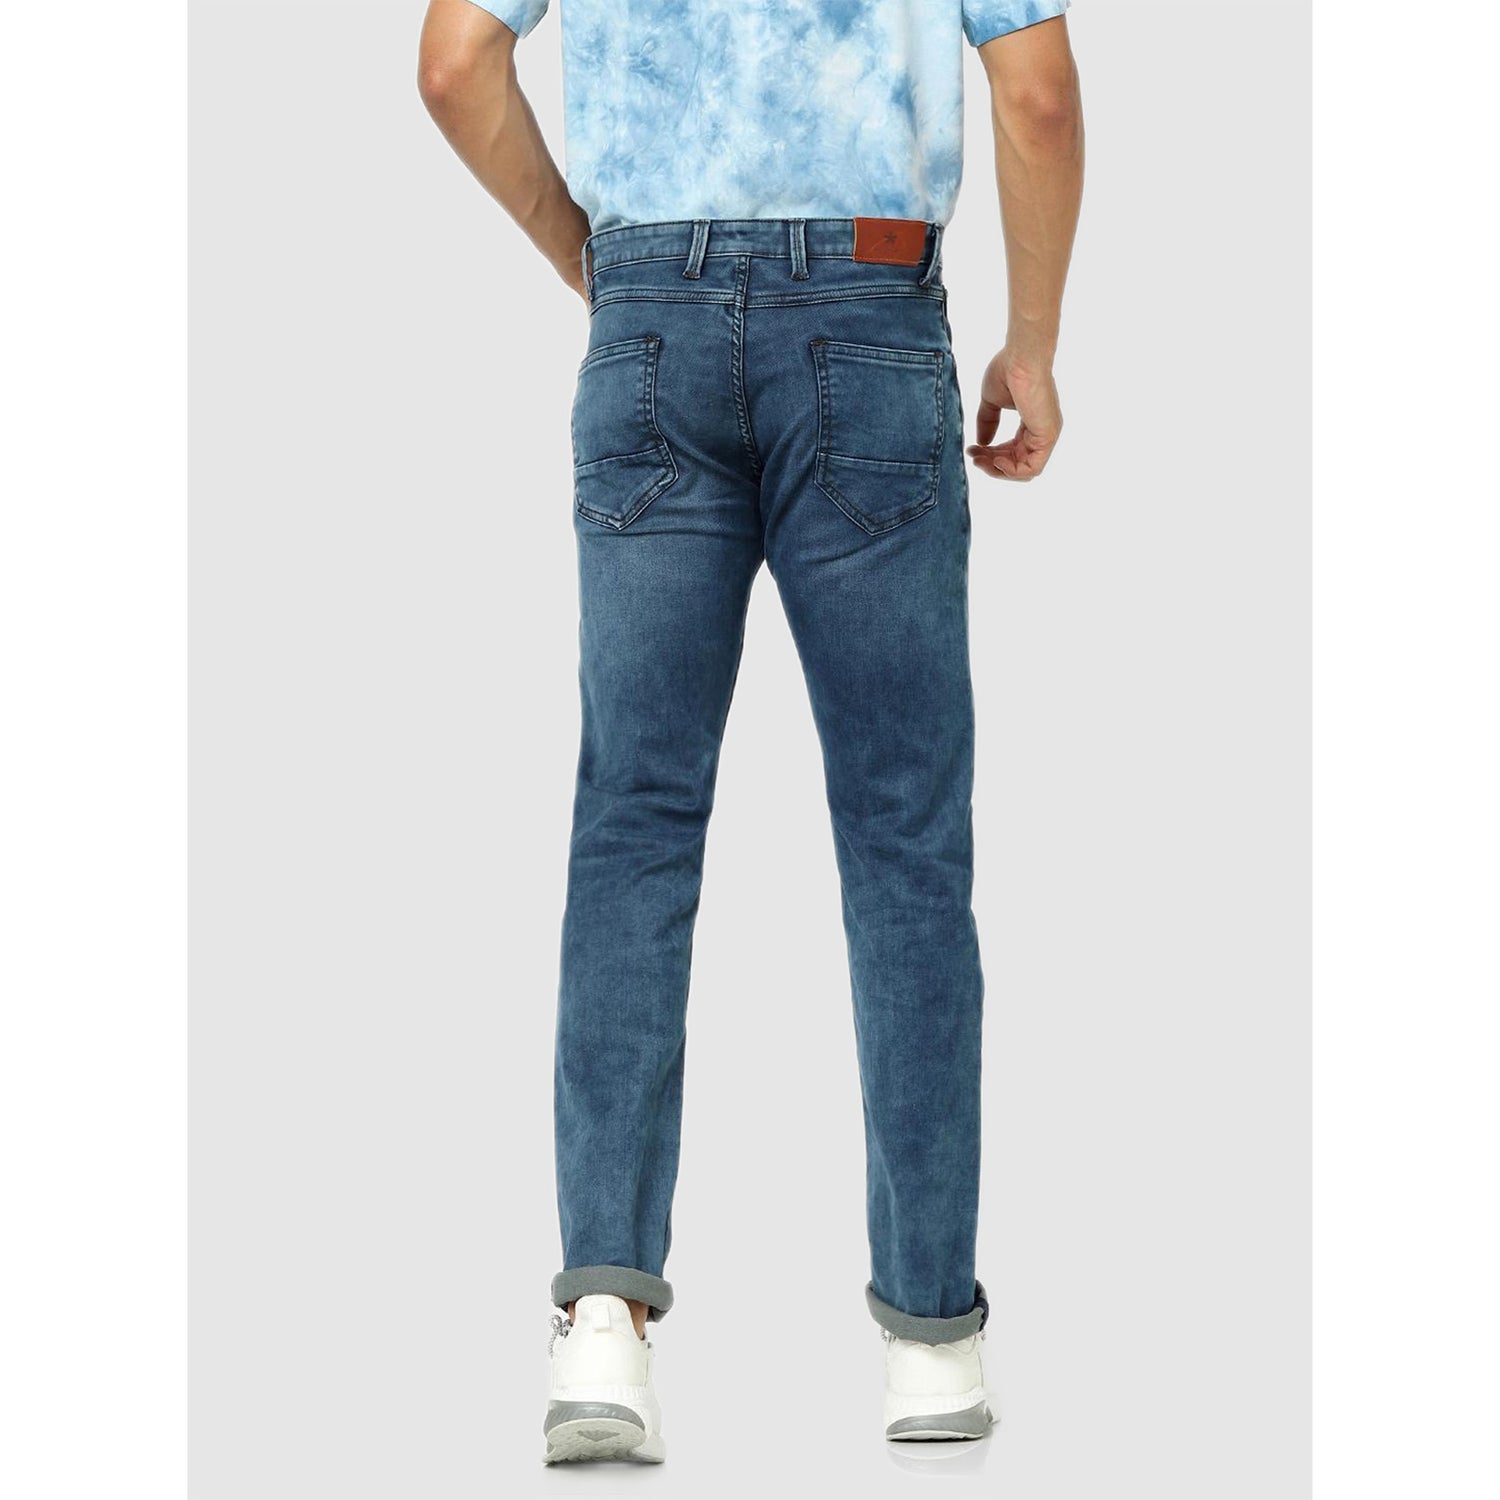 Celio Men's Clothing | Shirts, Jeans & Outerwear